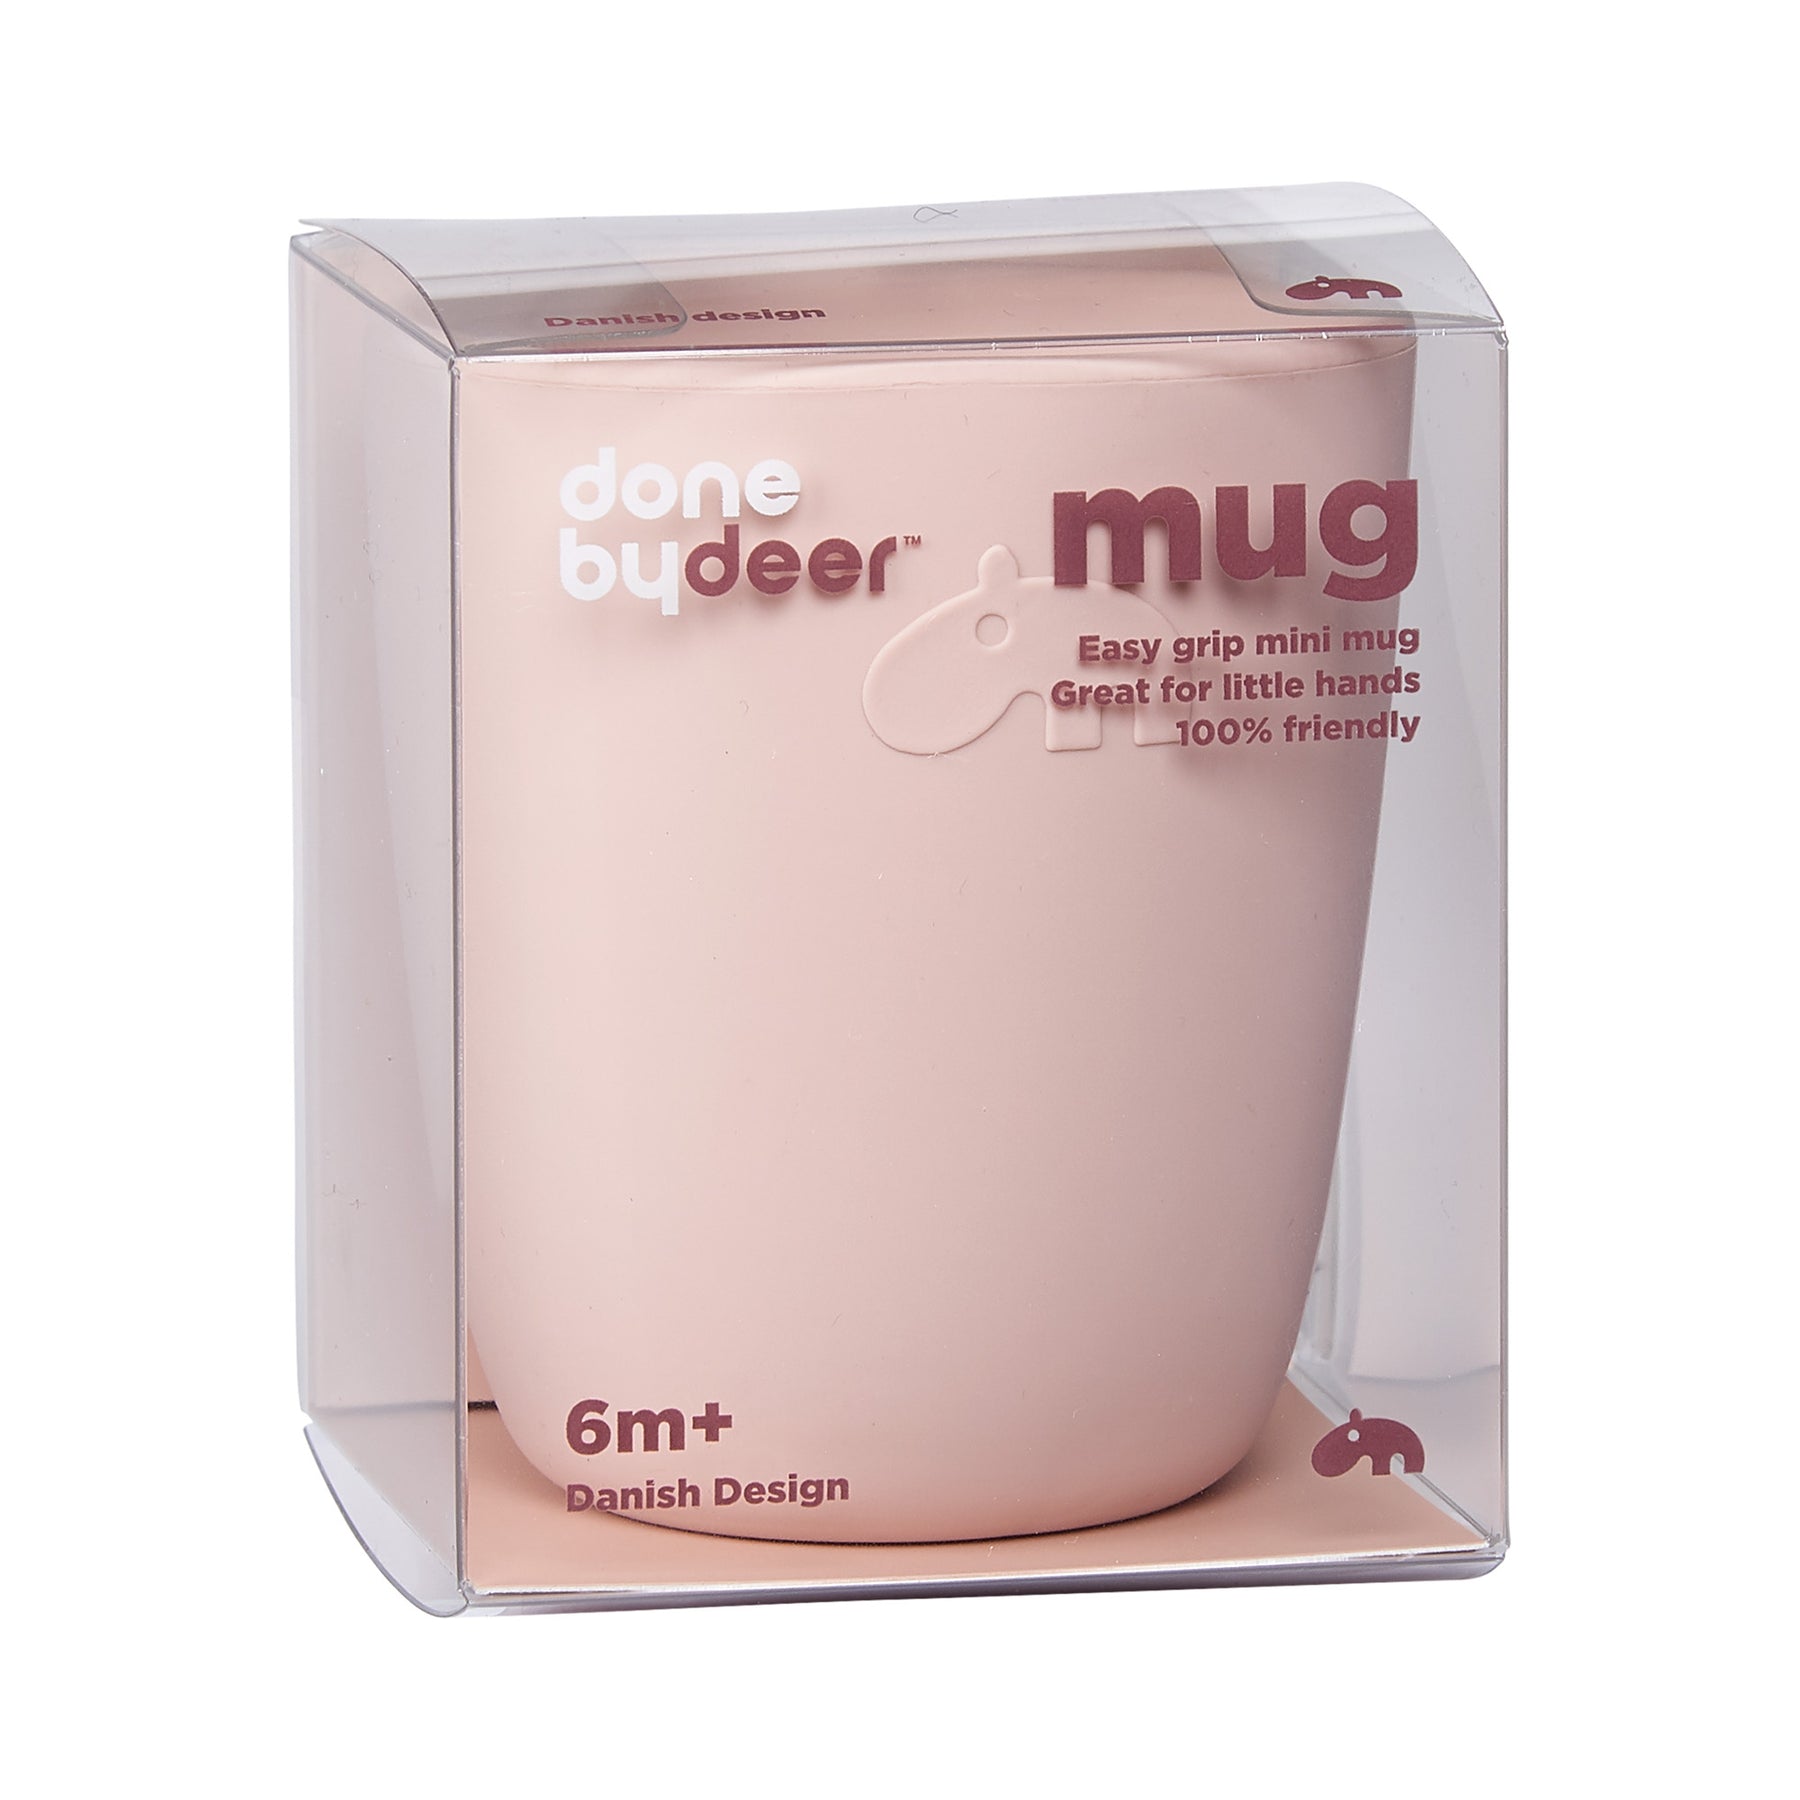 Silicone mini mug - Powder - Packaging